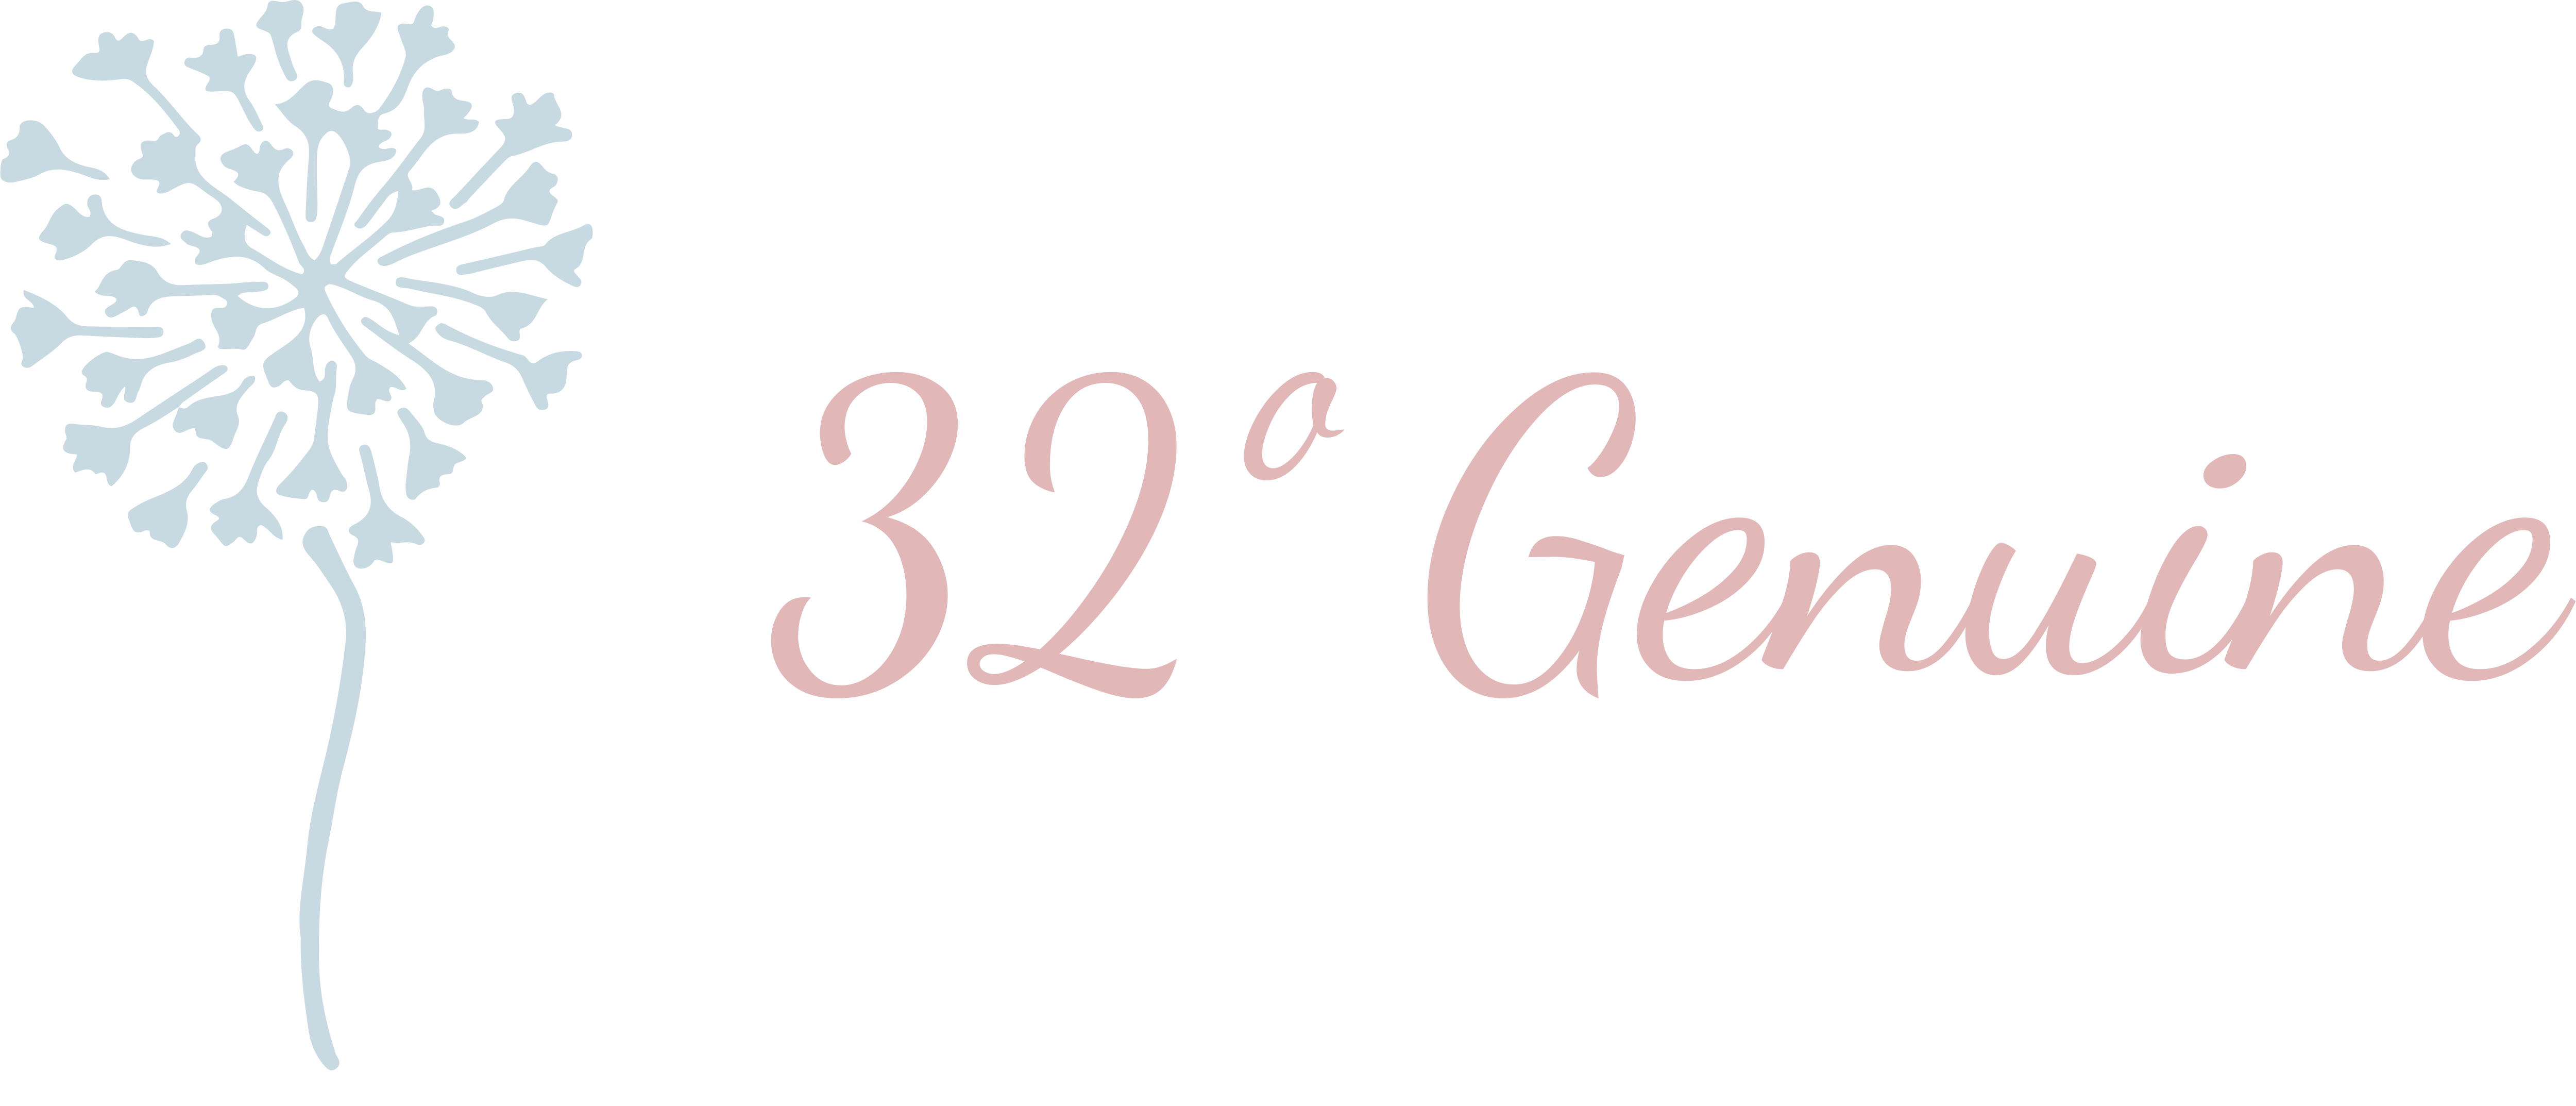 32 Degrees Genuine 